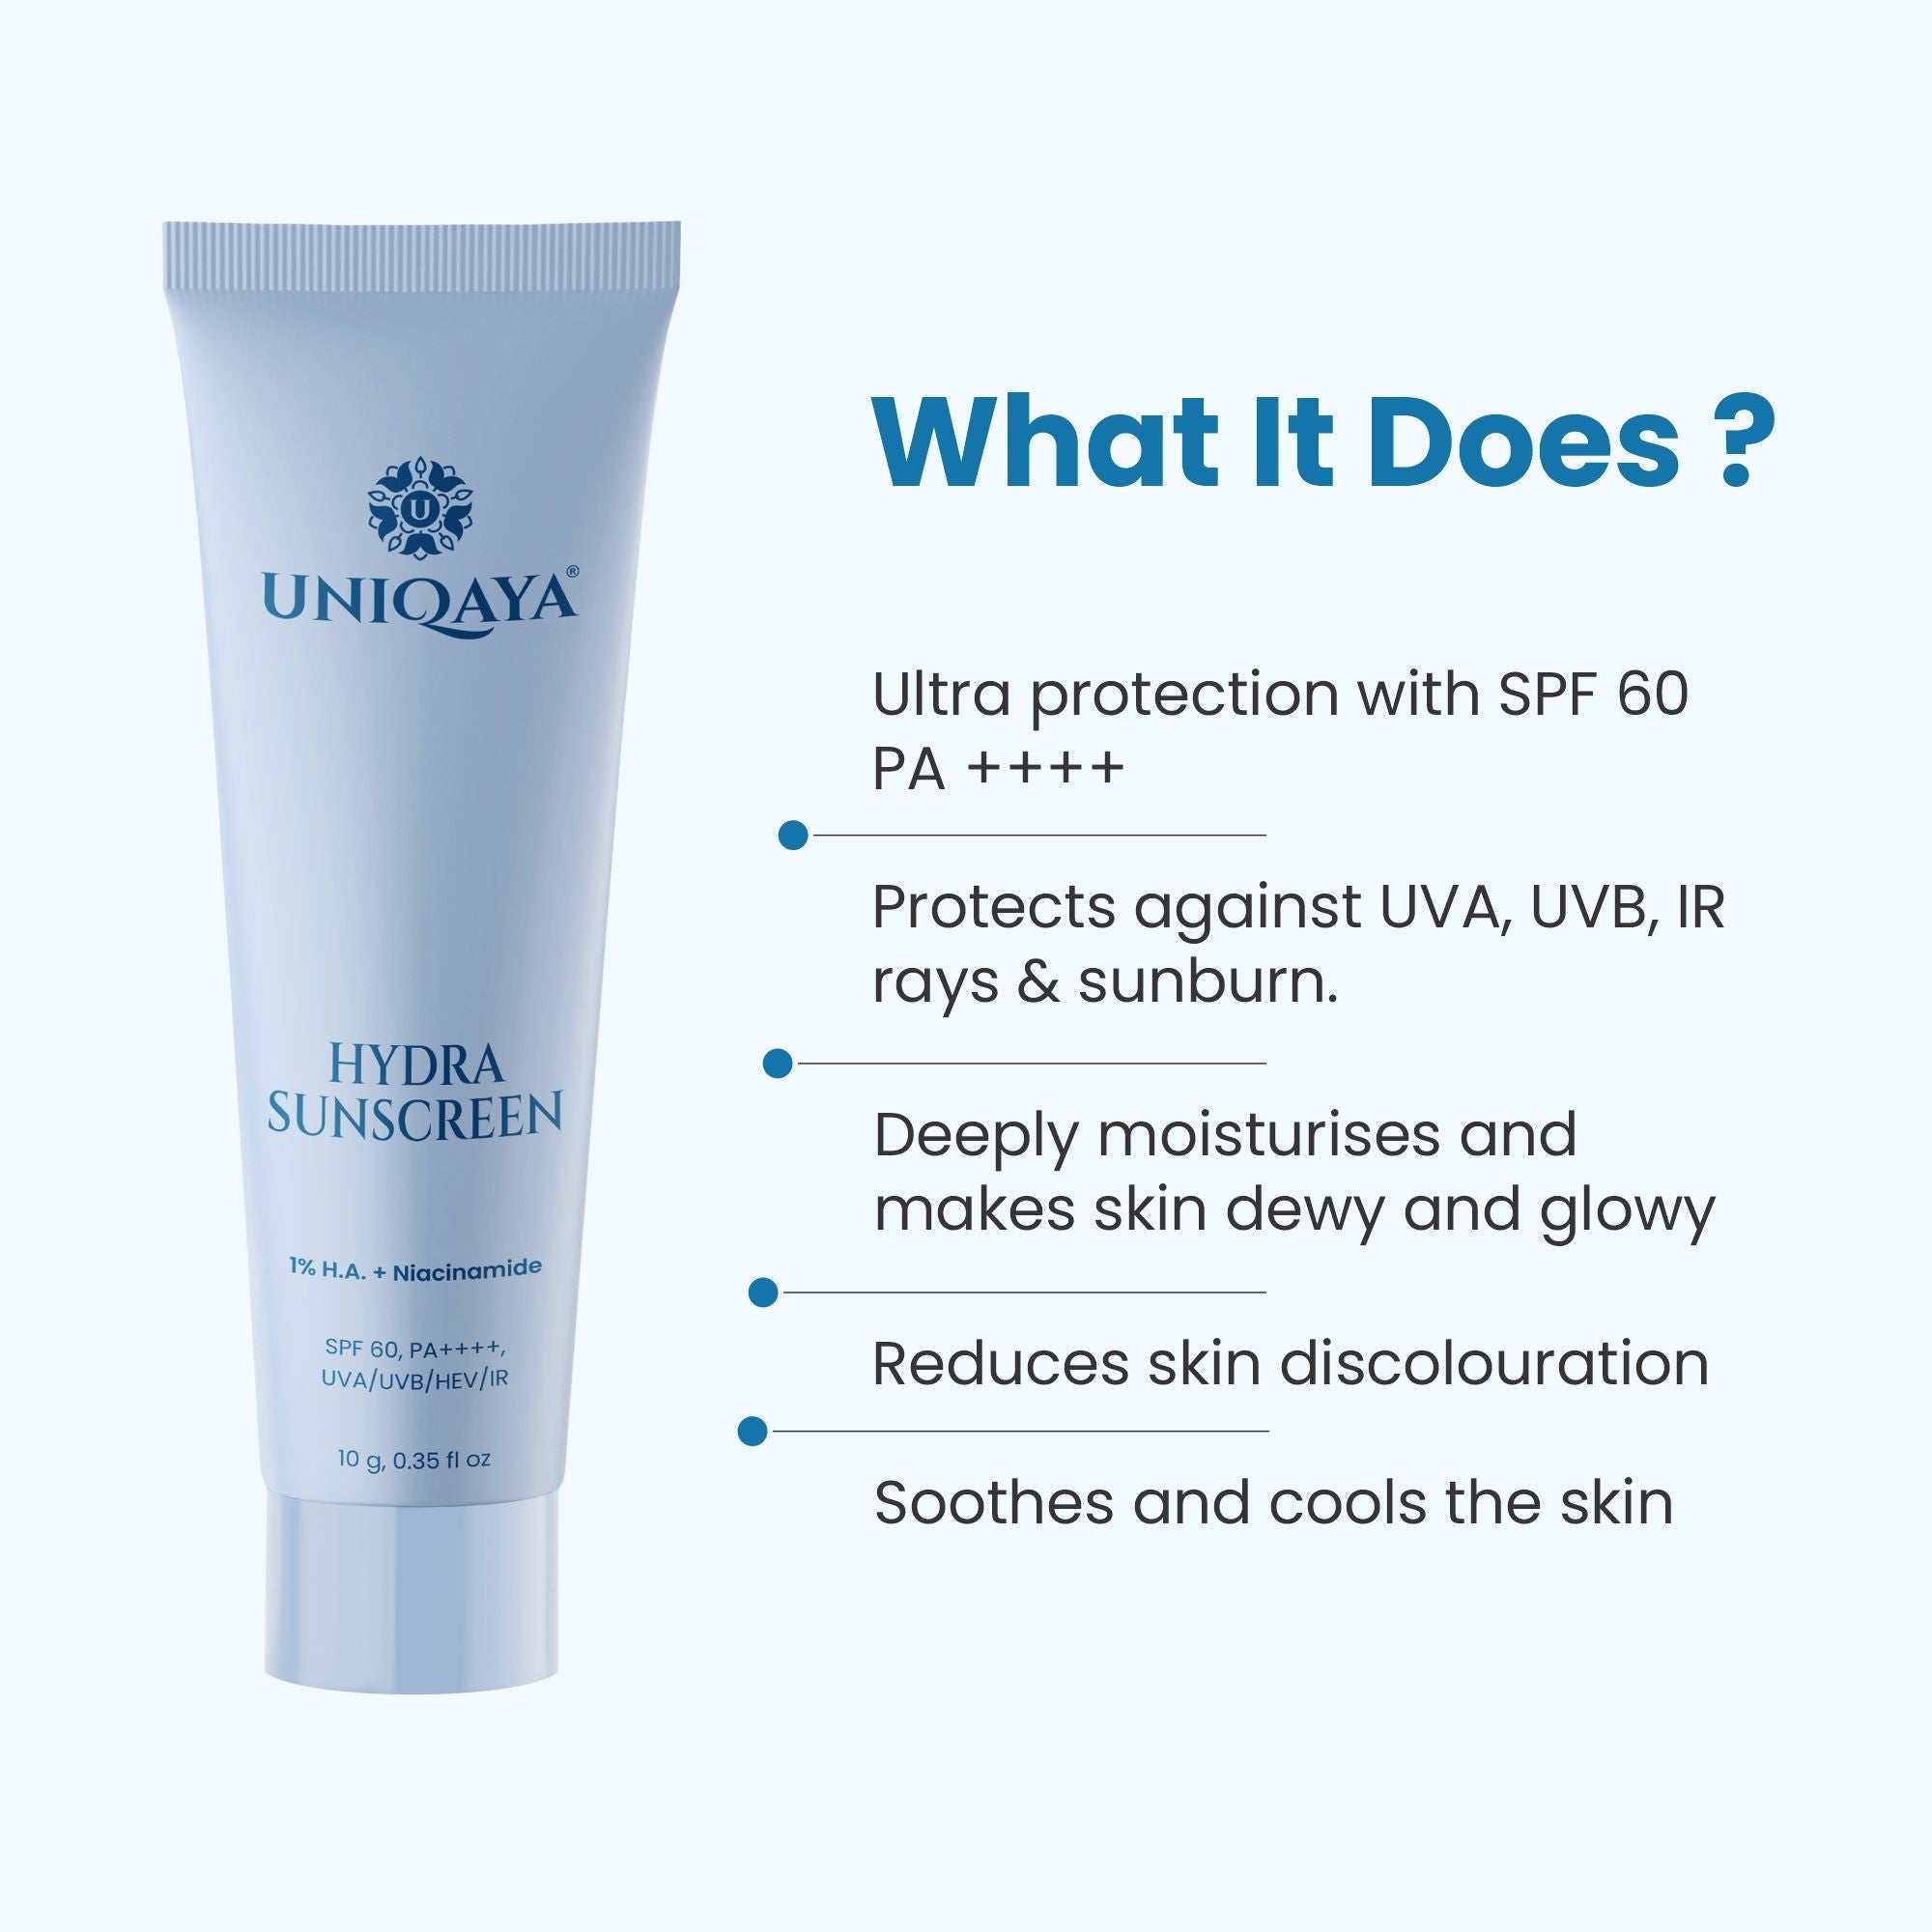 Uniqaya Hydra Sunscreen 10g What it Does?